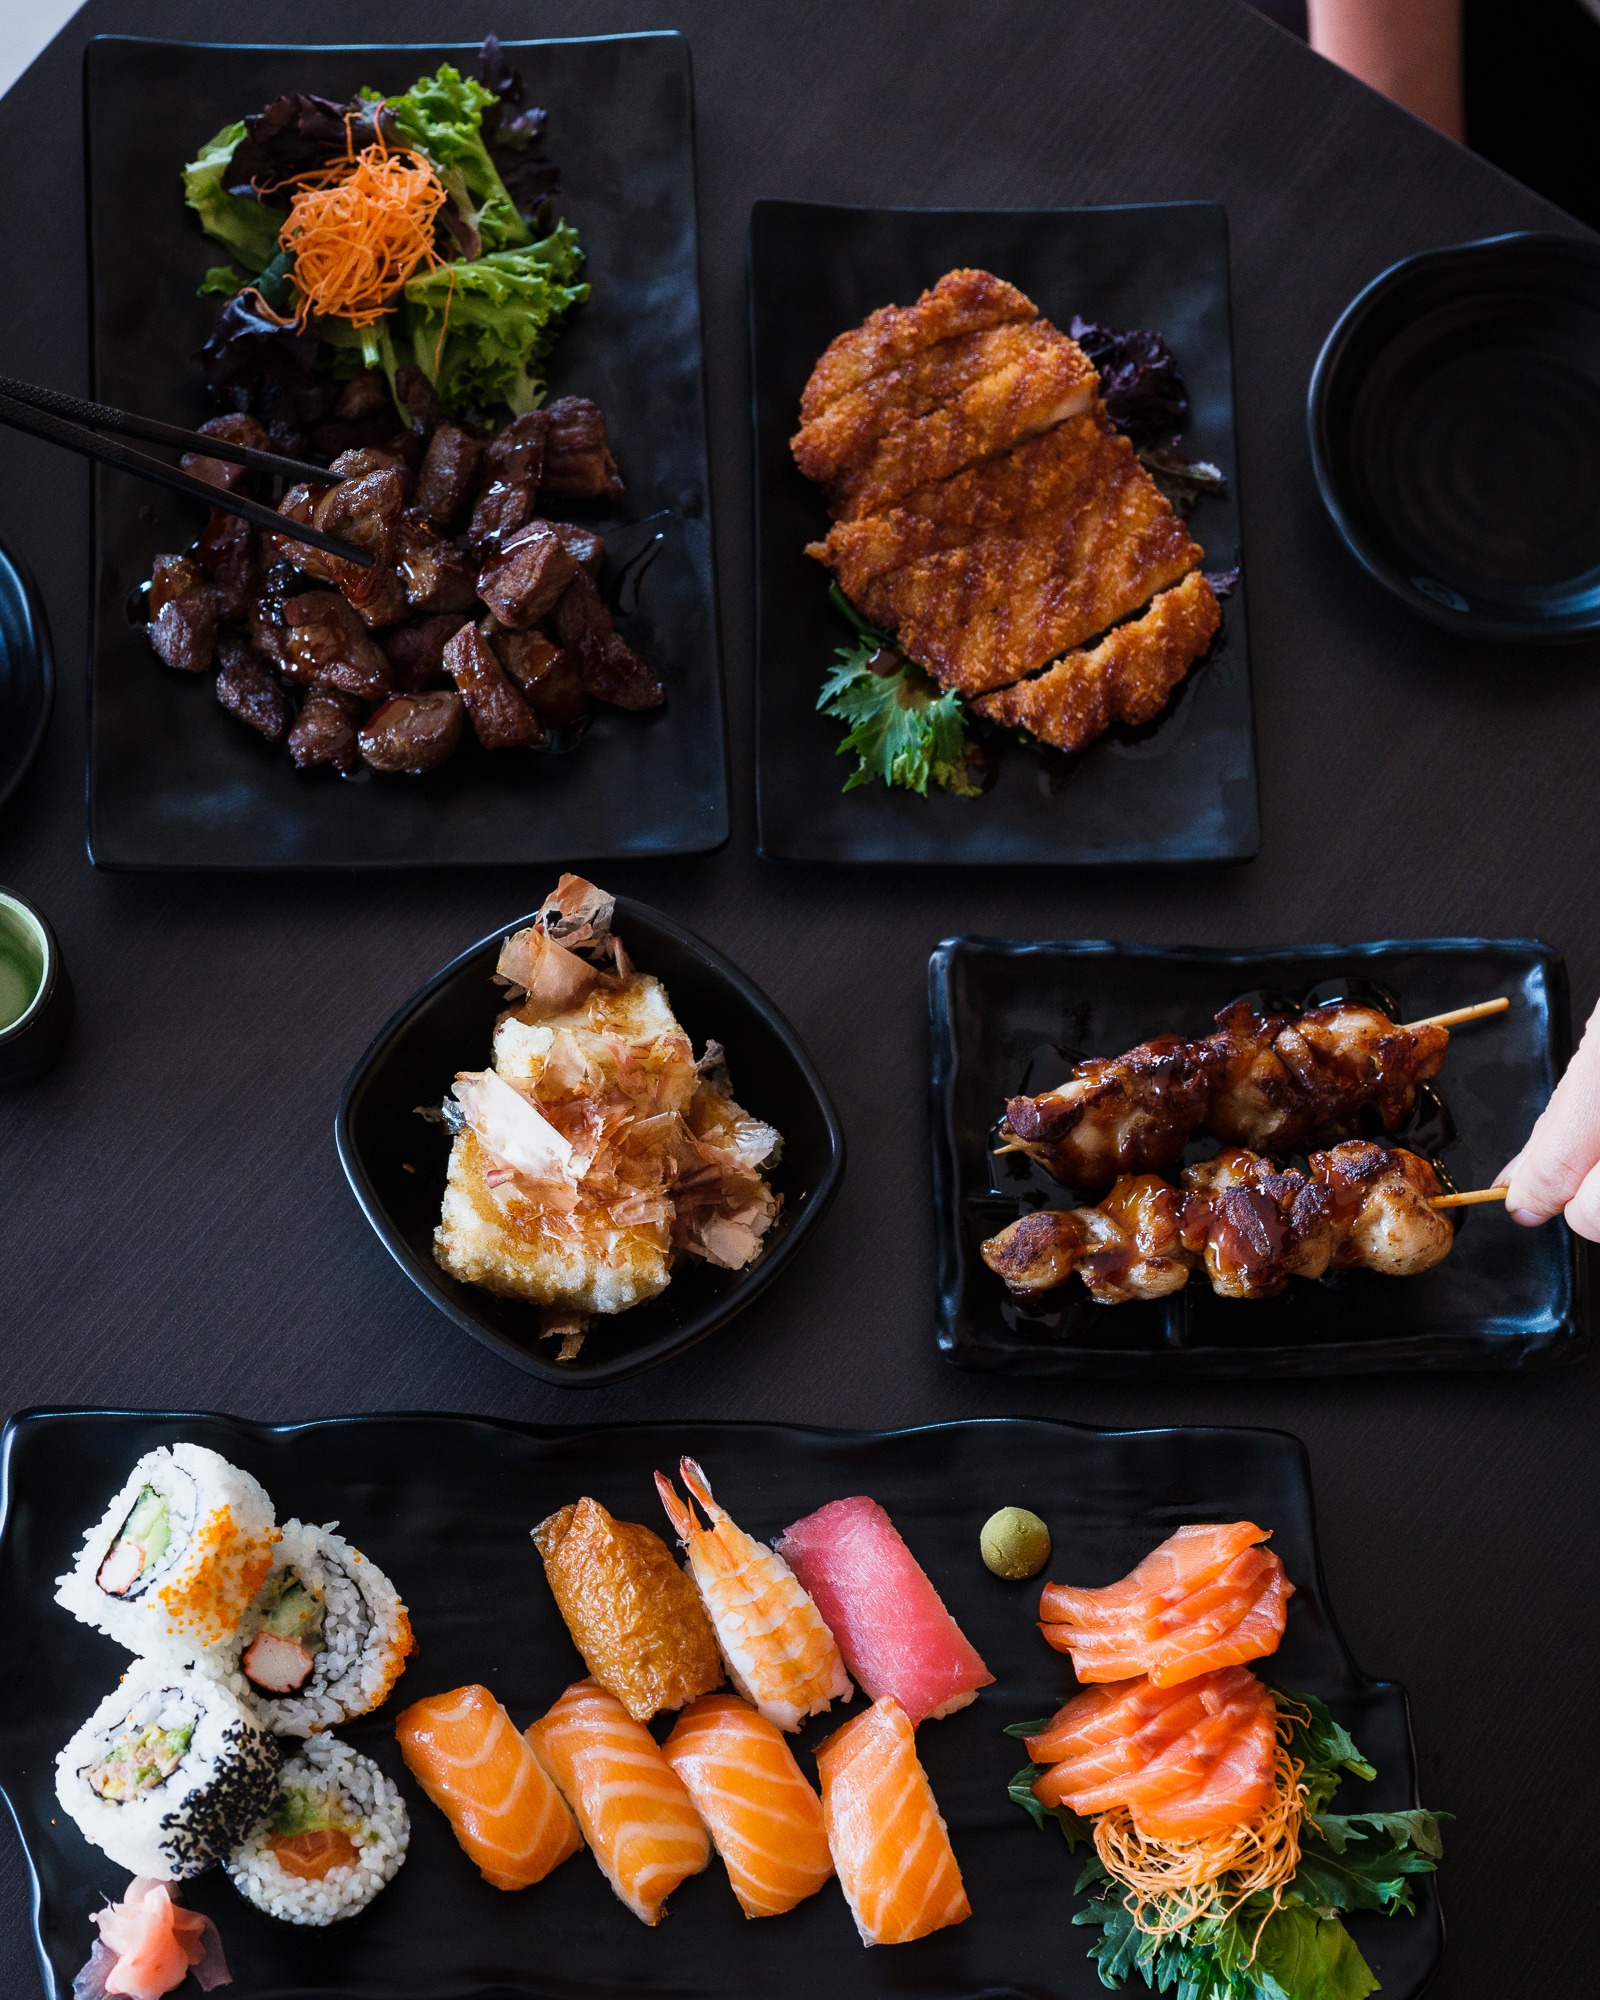 OKAMI Japanese Restaurant - Okami SUSHI & SASHIMI LARGE (62 PCS) ONLY  $44.00 ✨✨ Okami, we do Takeaway as well 🚗🚙🛵 , Check our Takeaway Menu  ⬇️⬇️